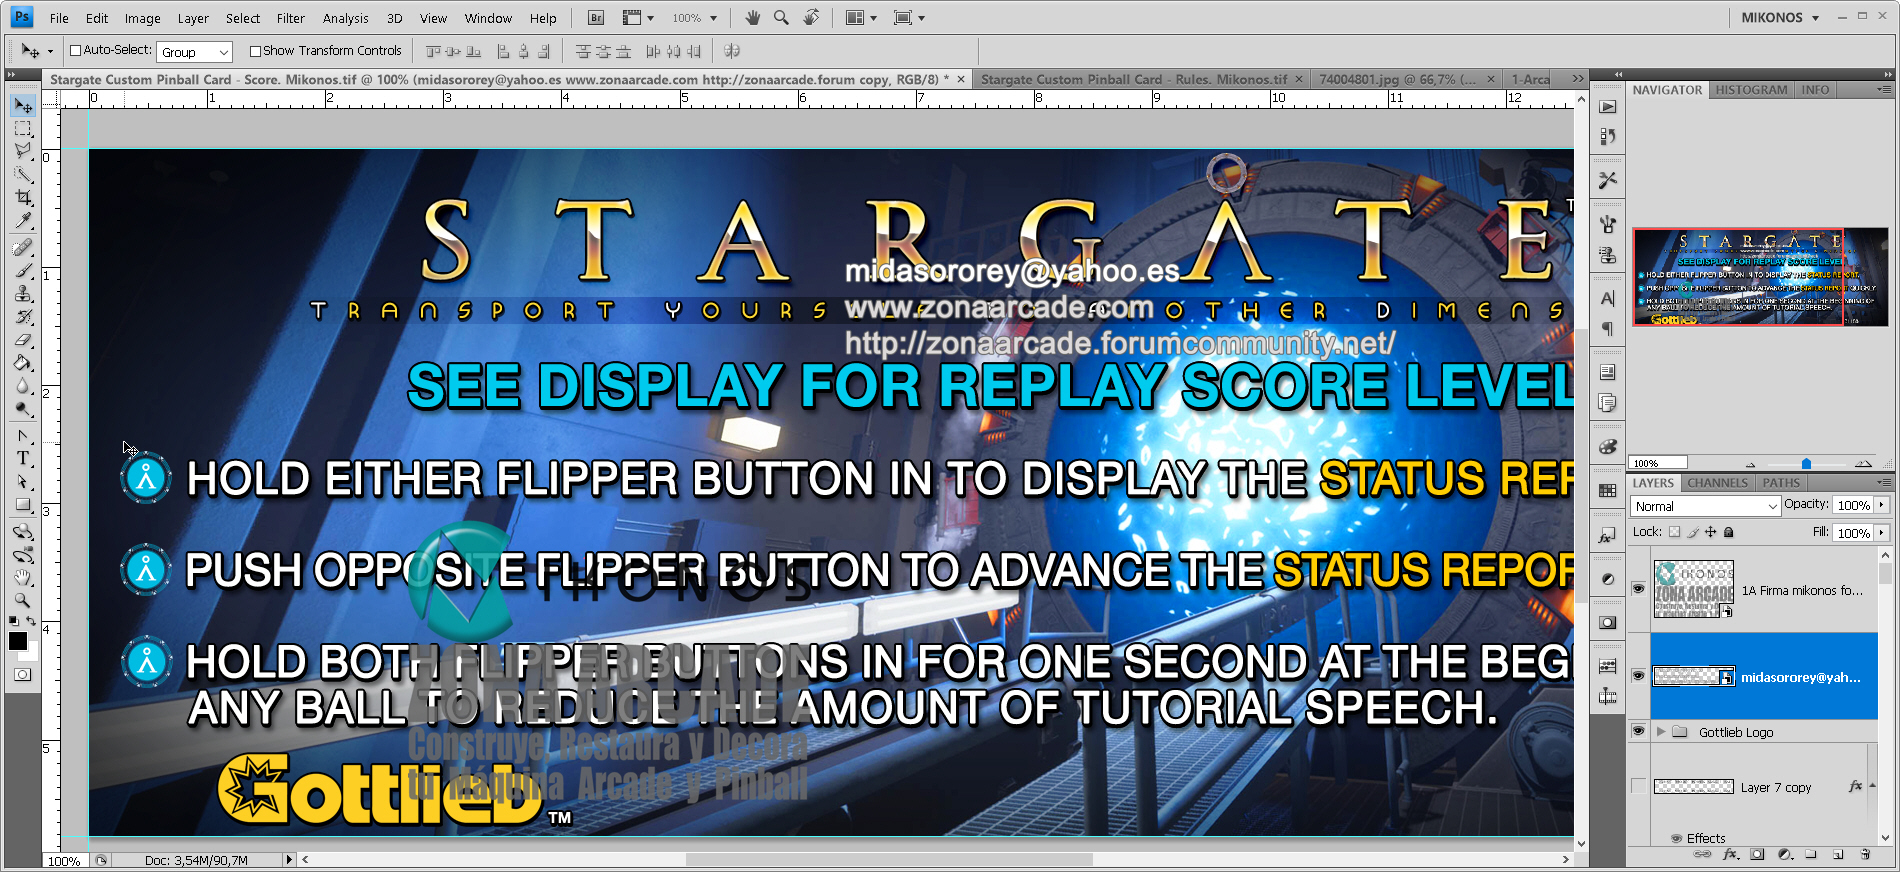 Stargate Pinball Card Customized - Score. Mikonos1